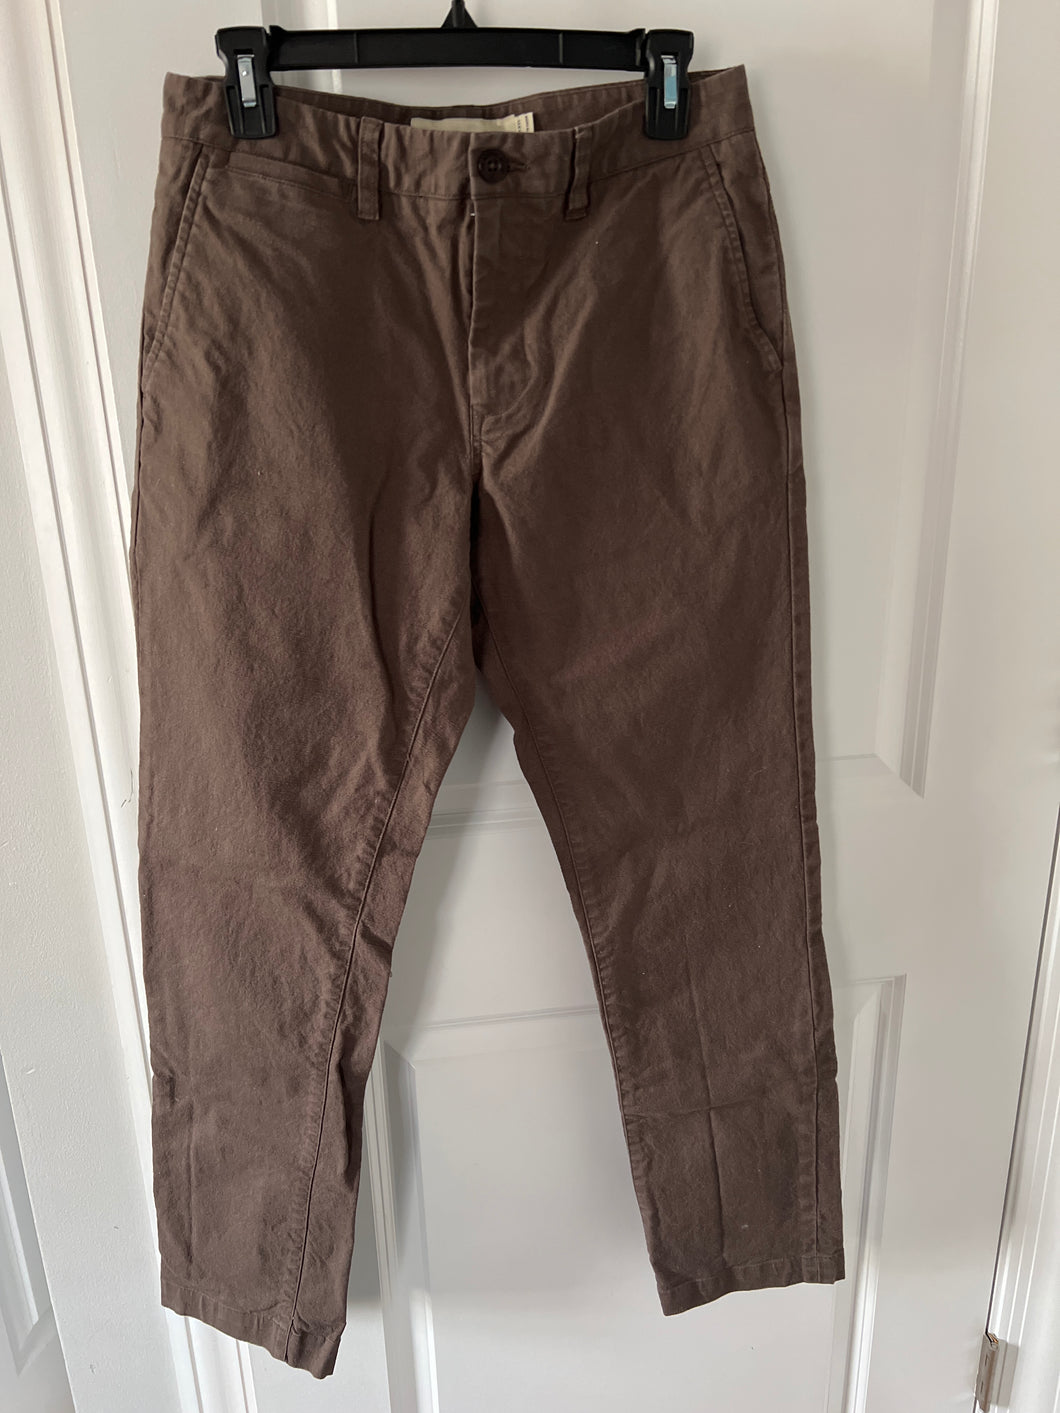 Normal Brand Pants 30